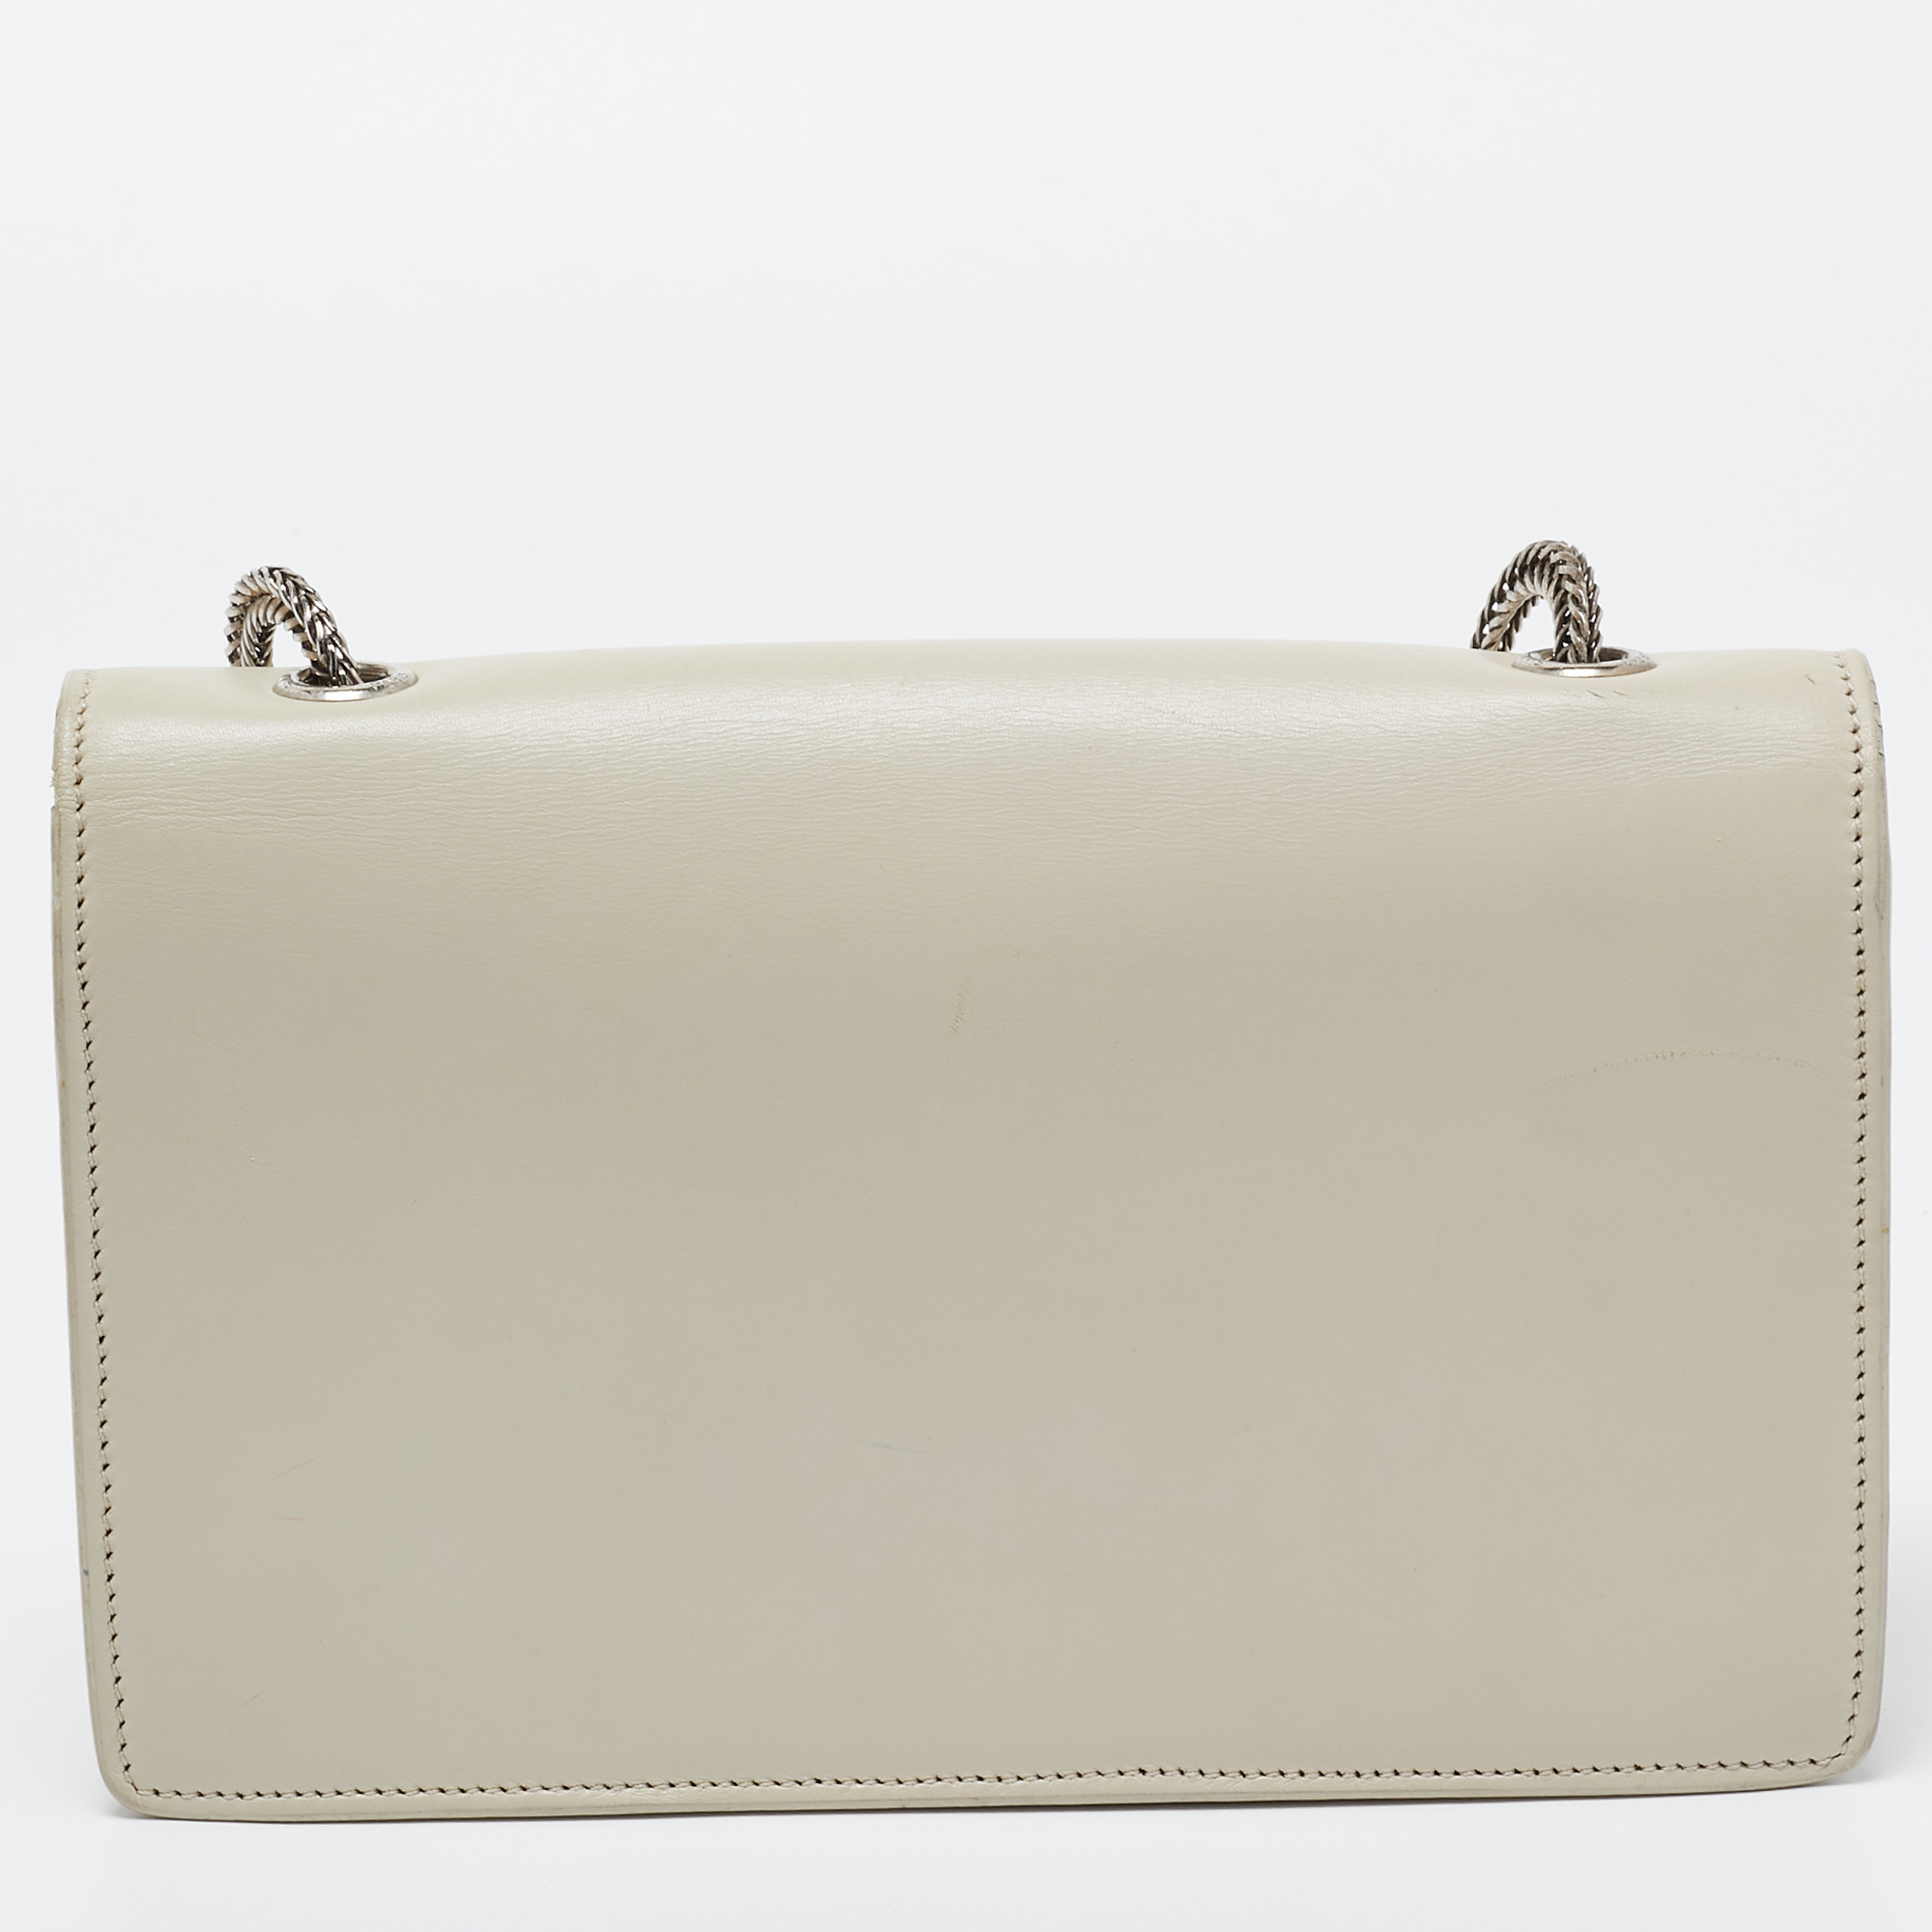 Saint Laurent Cream Leather Studded Betty Shoulder Bag